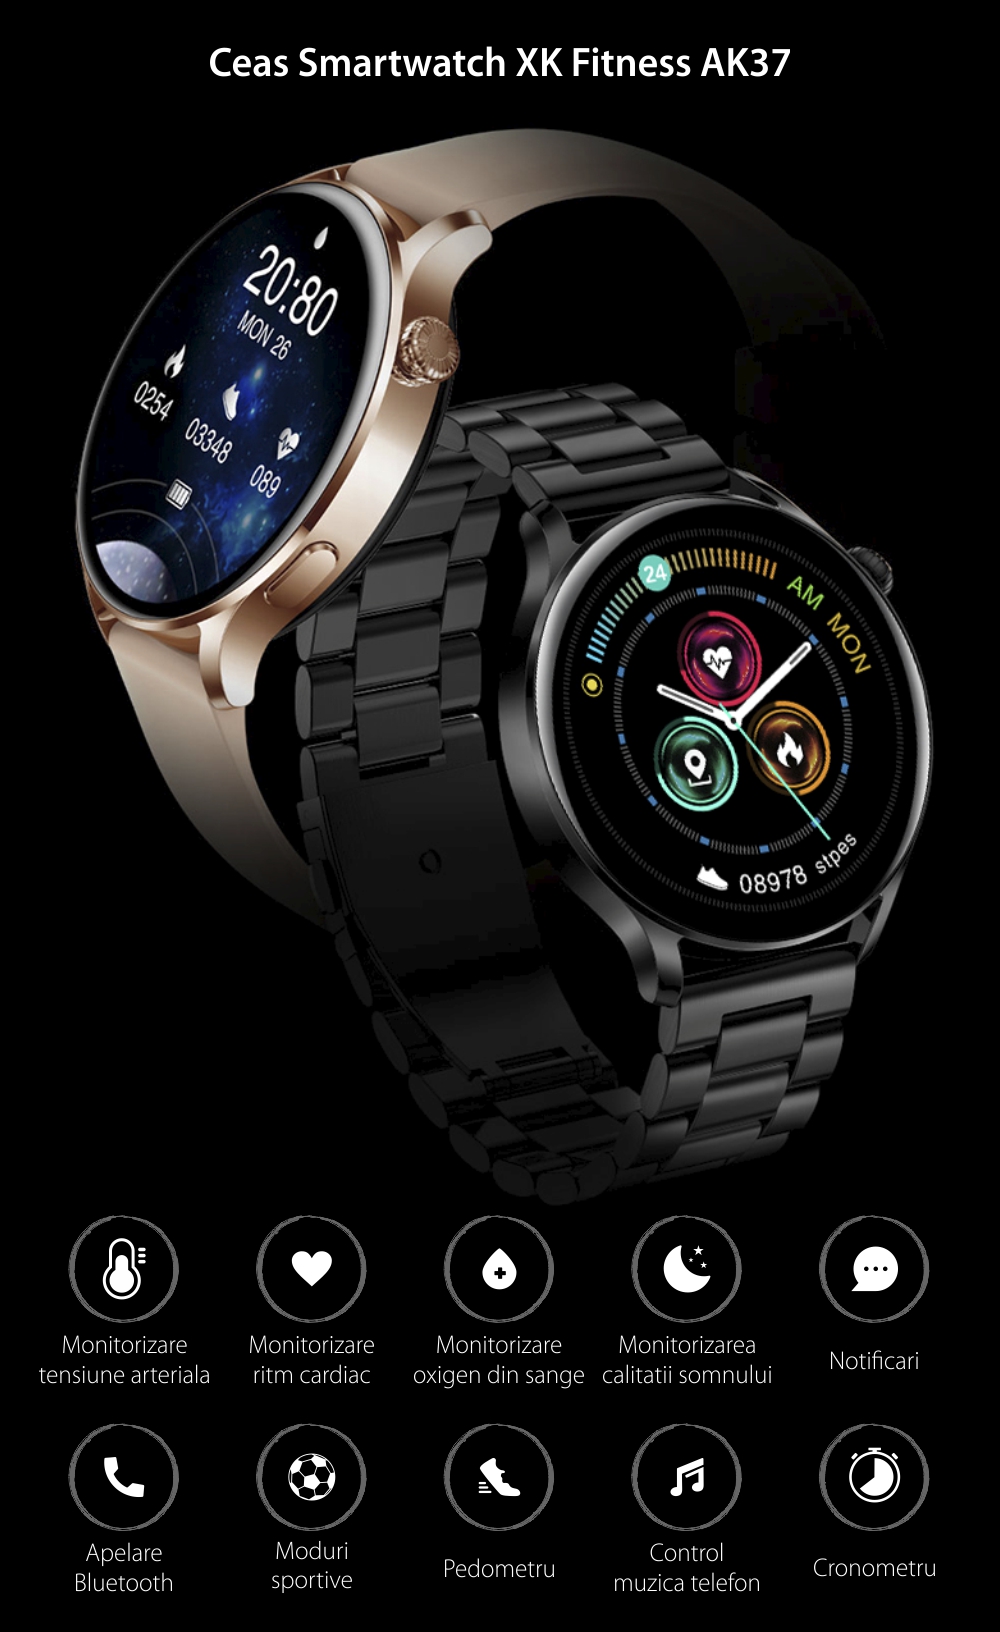 Ceas Smartwatch XK Fitness AK37 cu Functii monitorizare sanatate, Notificari, Bluetooth, Cronometru, Bratara metalica, Argintiu